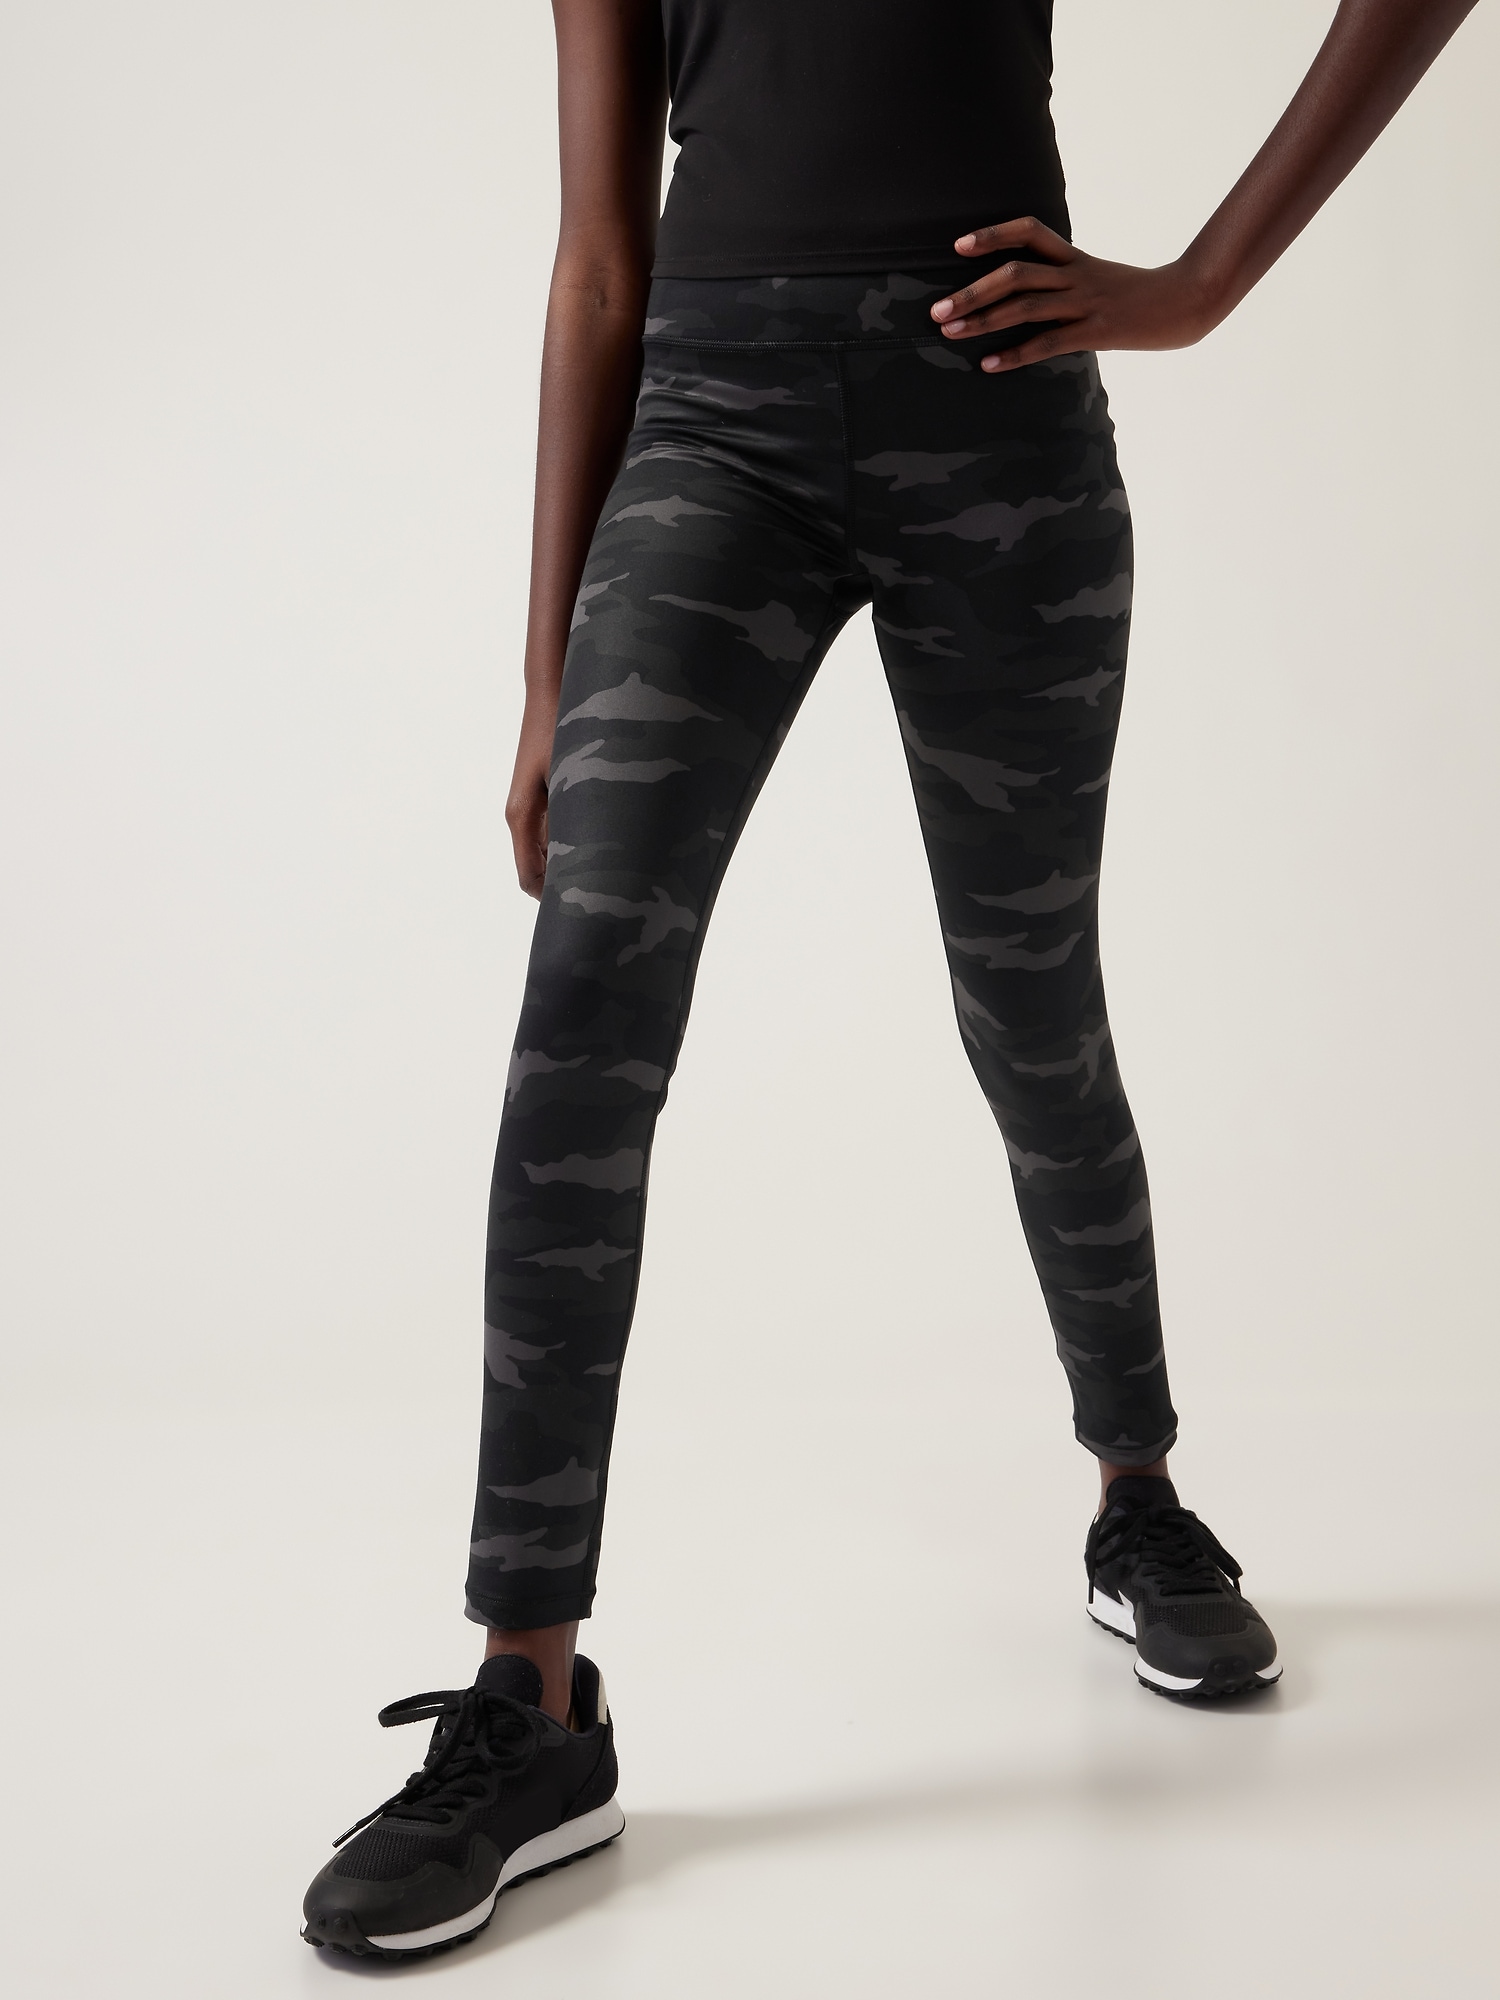 Athleta girl black leggings size L 12